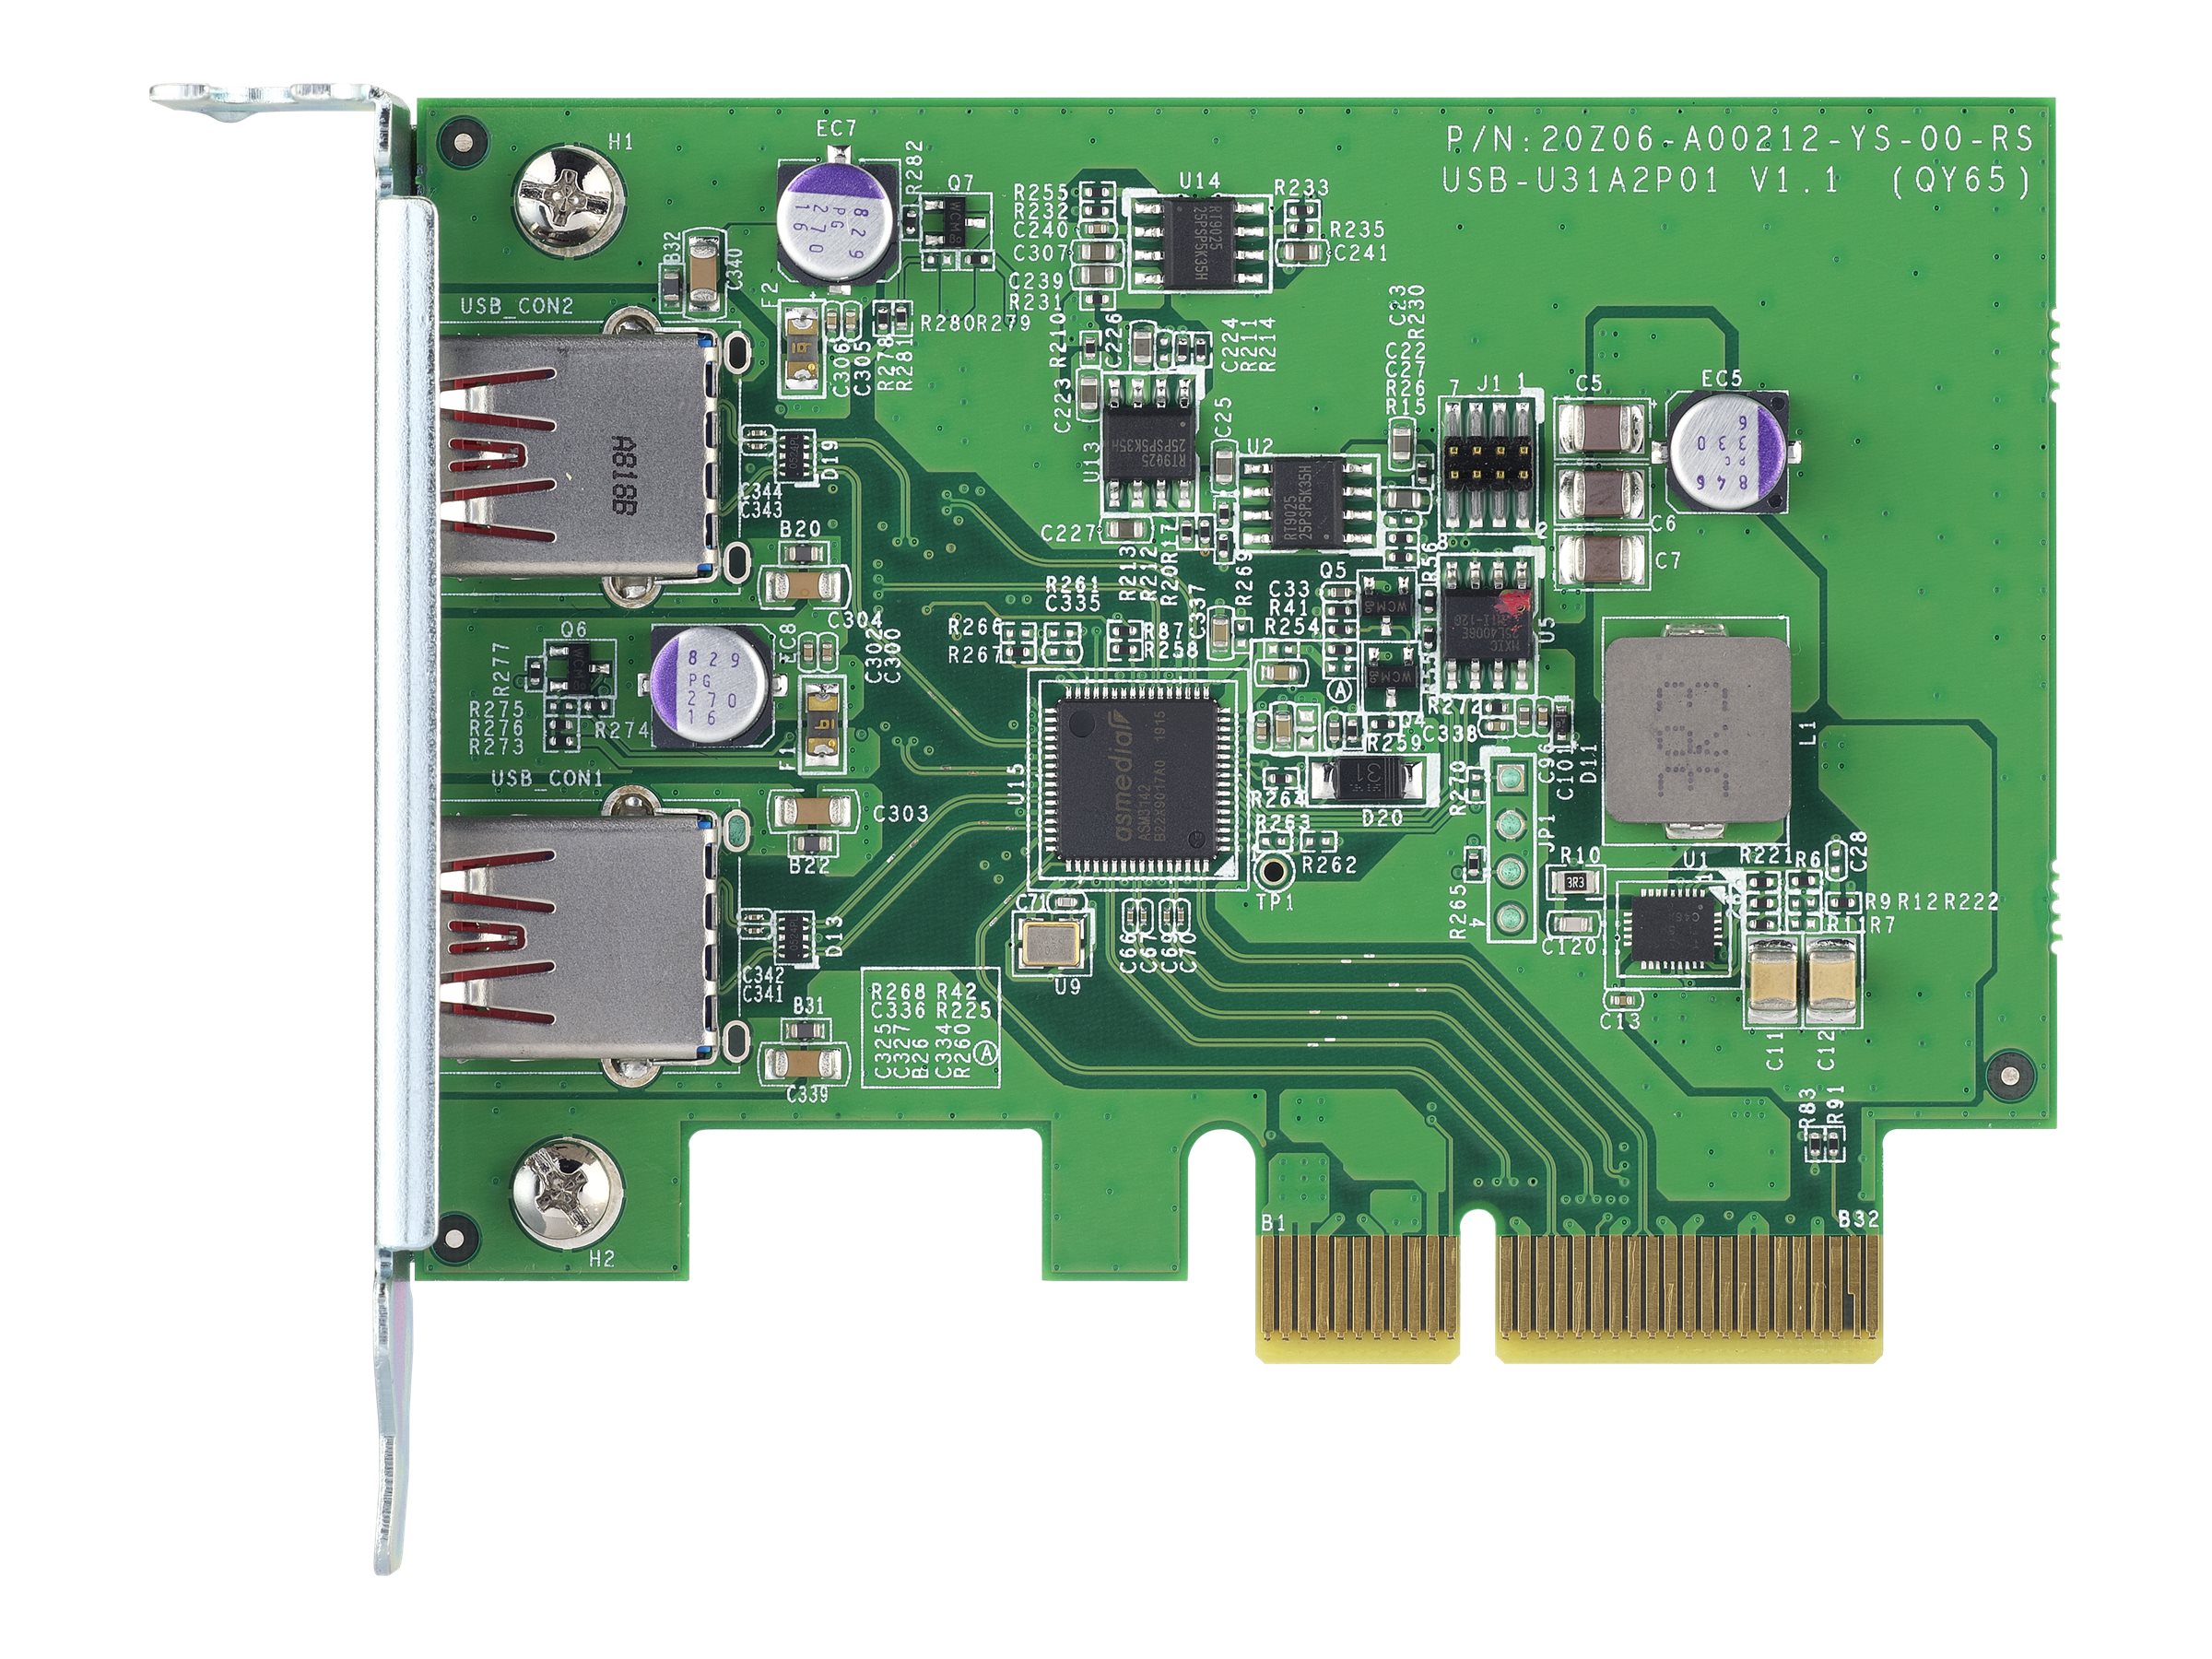 QNAP QXP-10G2U3A - USB-Adapter - PCIe 2.0 x2 Low-Profile